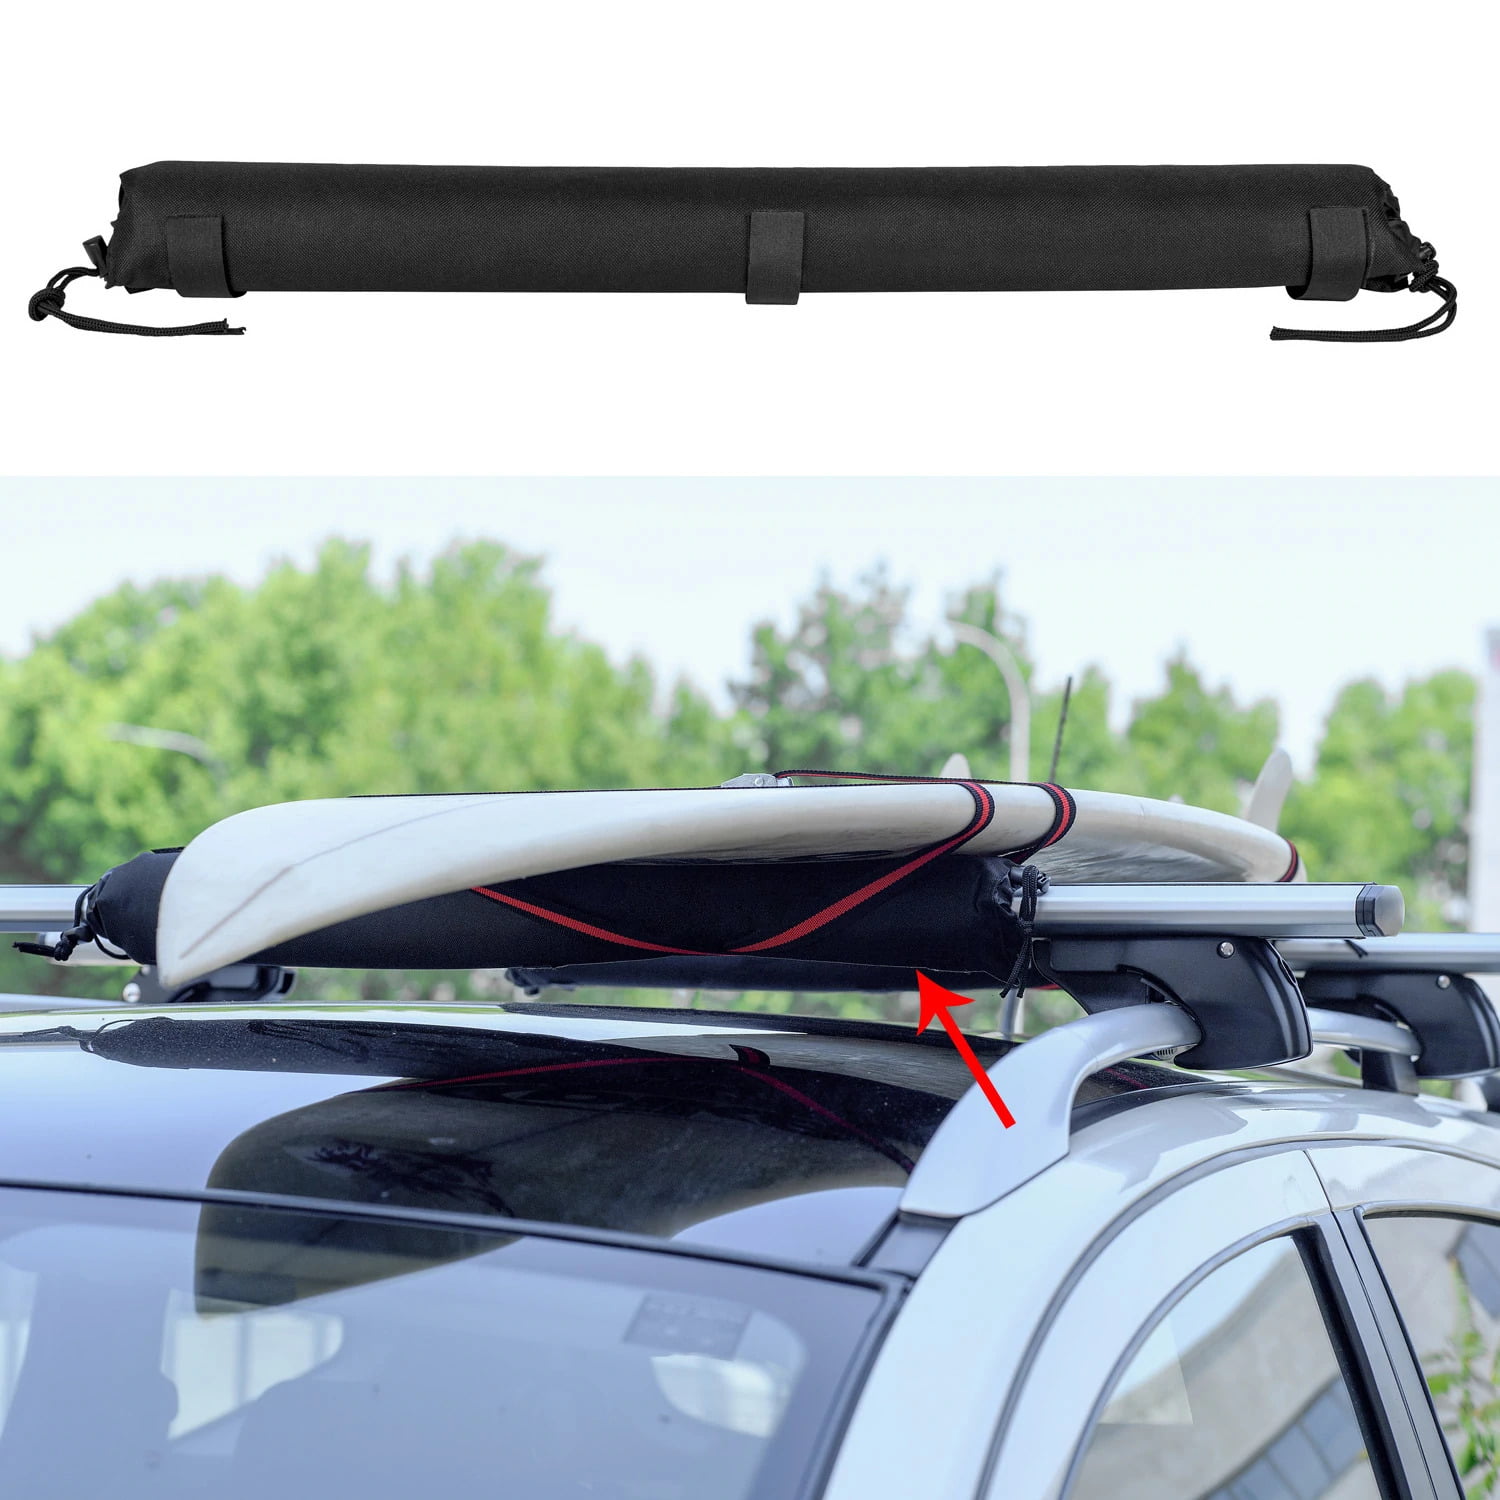 Details about   DORSAL SunGuard No Fade Aero Roof Rack Pads Car Crossbar Surfboard Kayak SUP S 